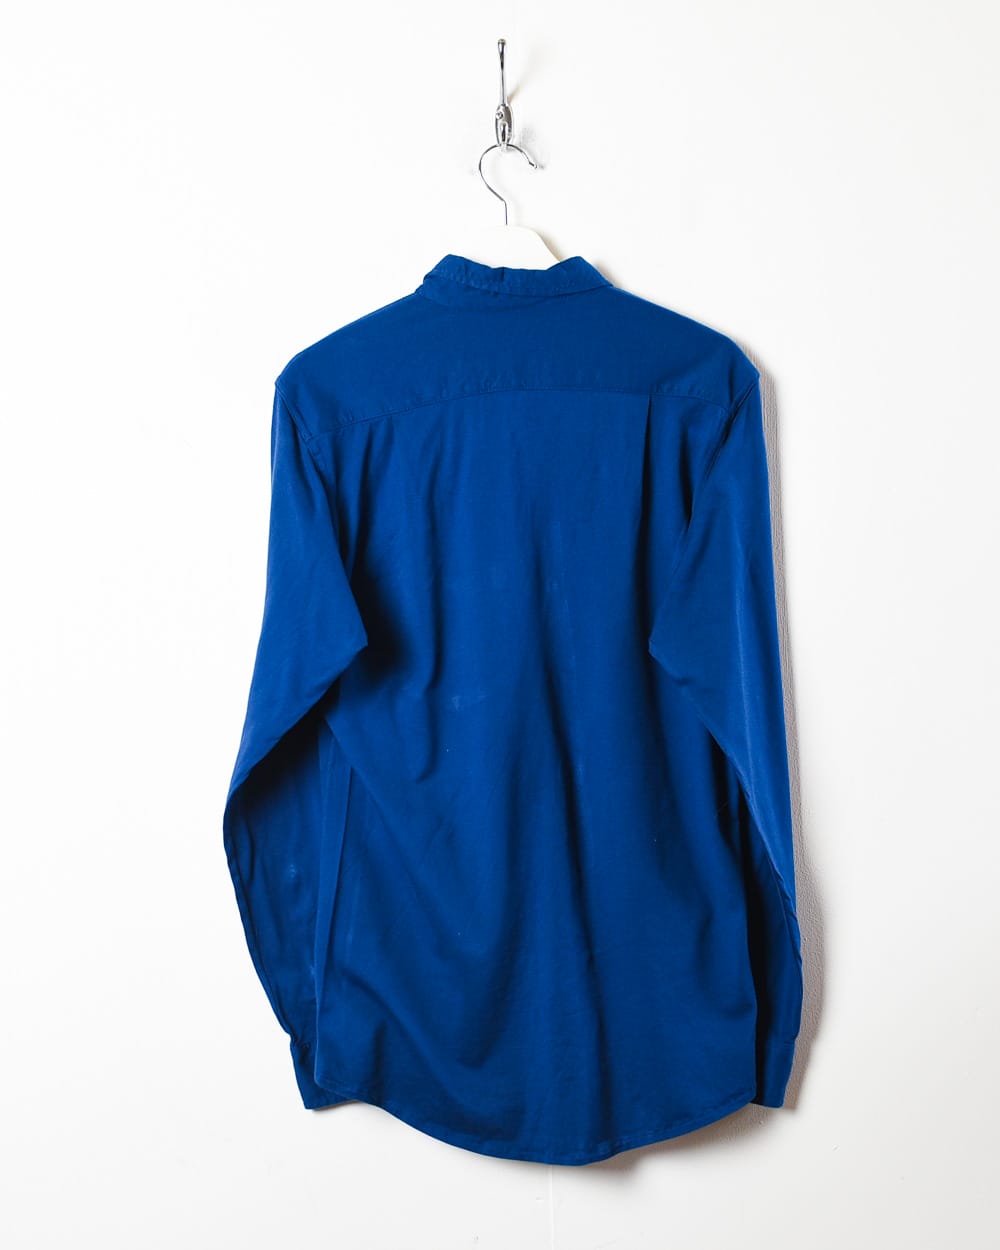 Blue Lacoste Shirt - Medium